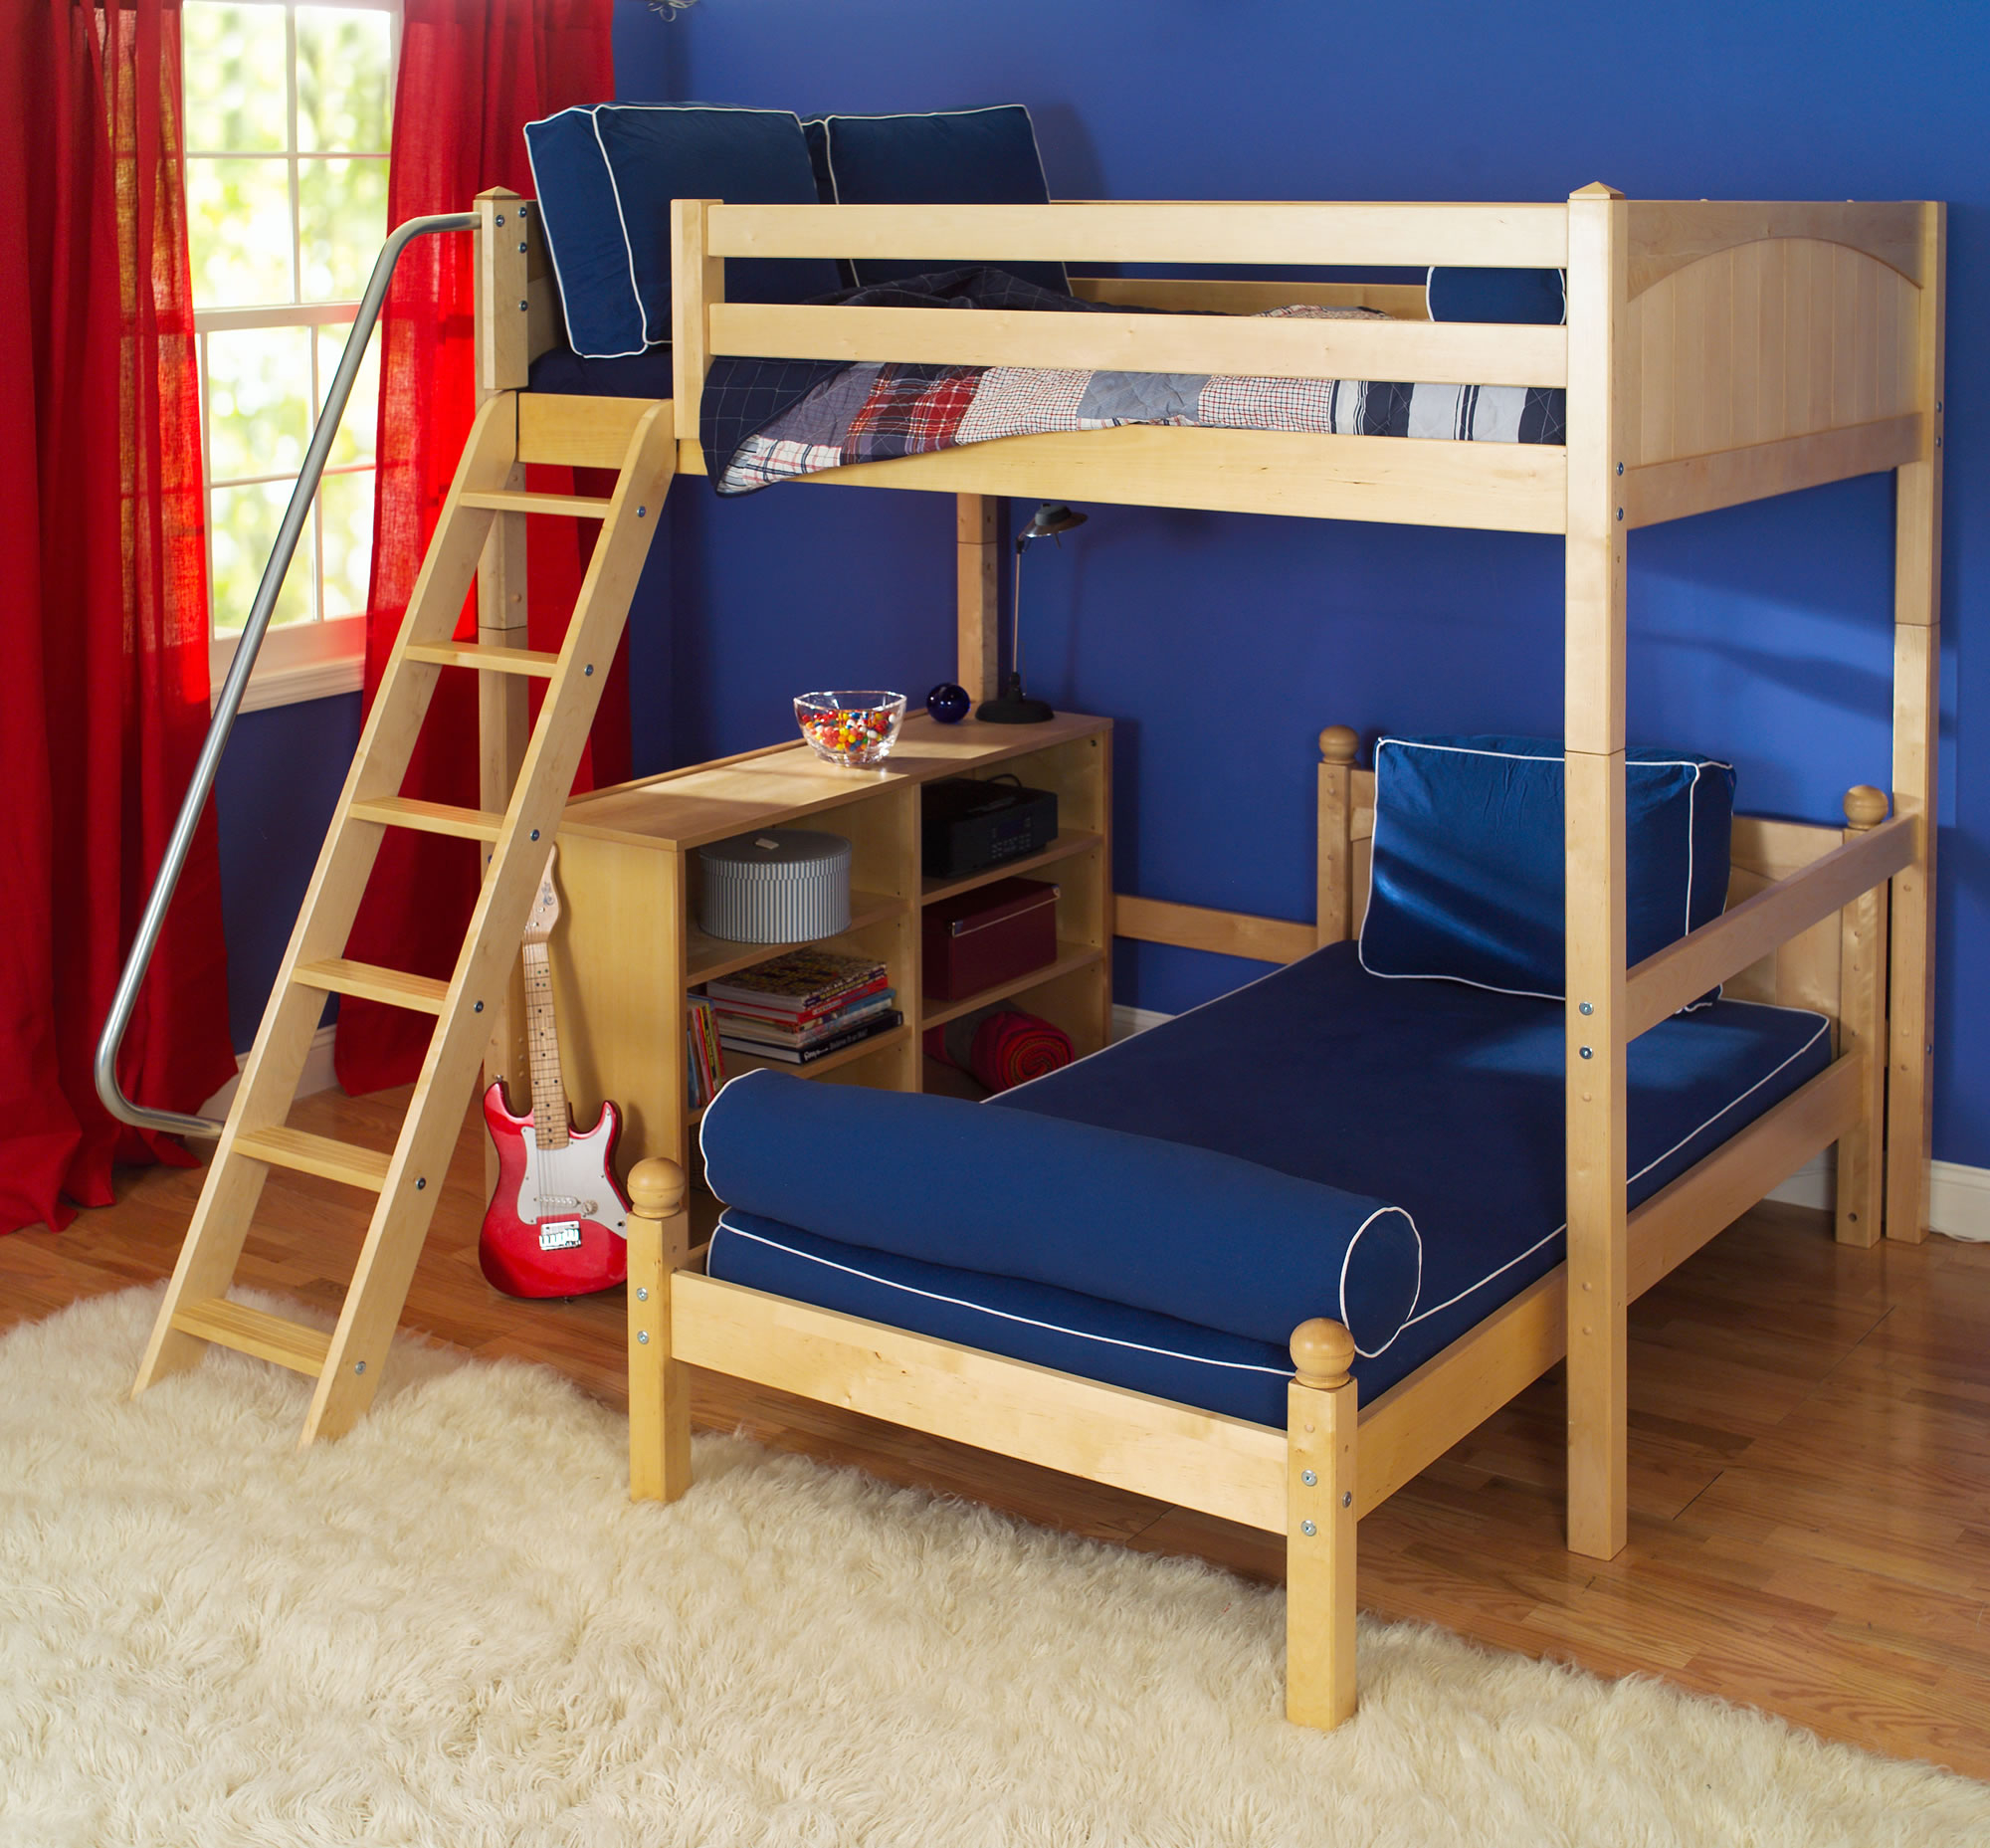 L shaped bunk bed 25